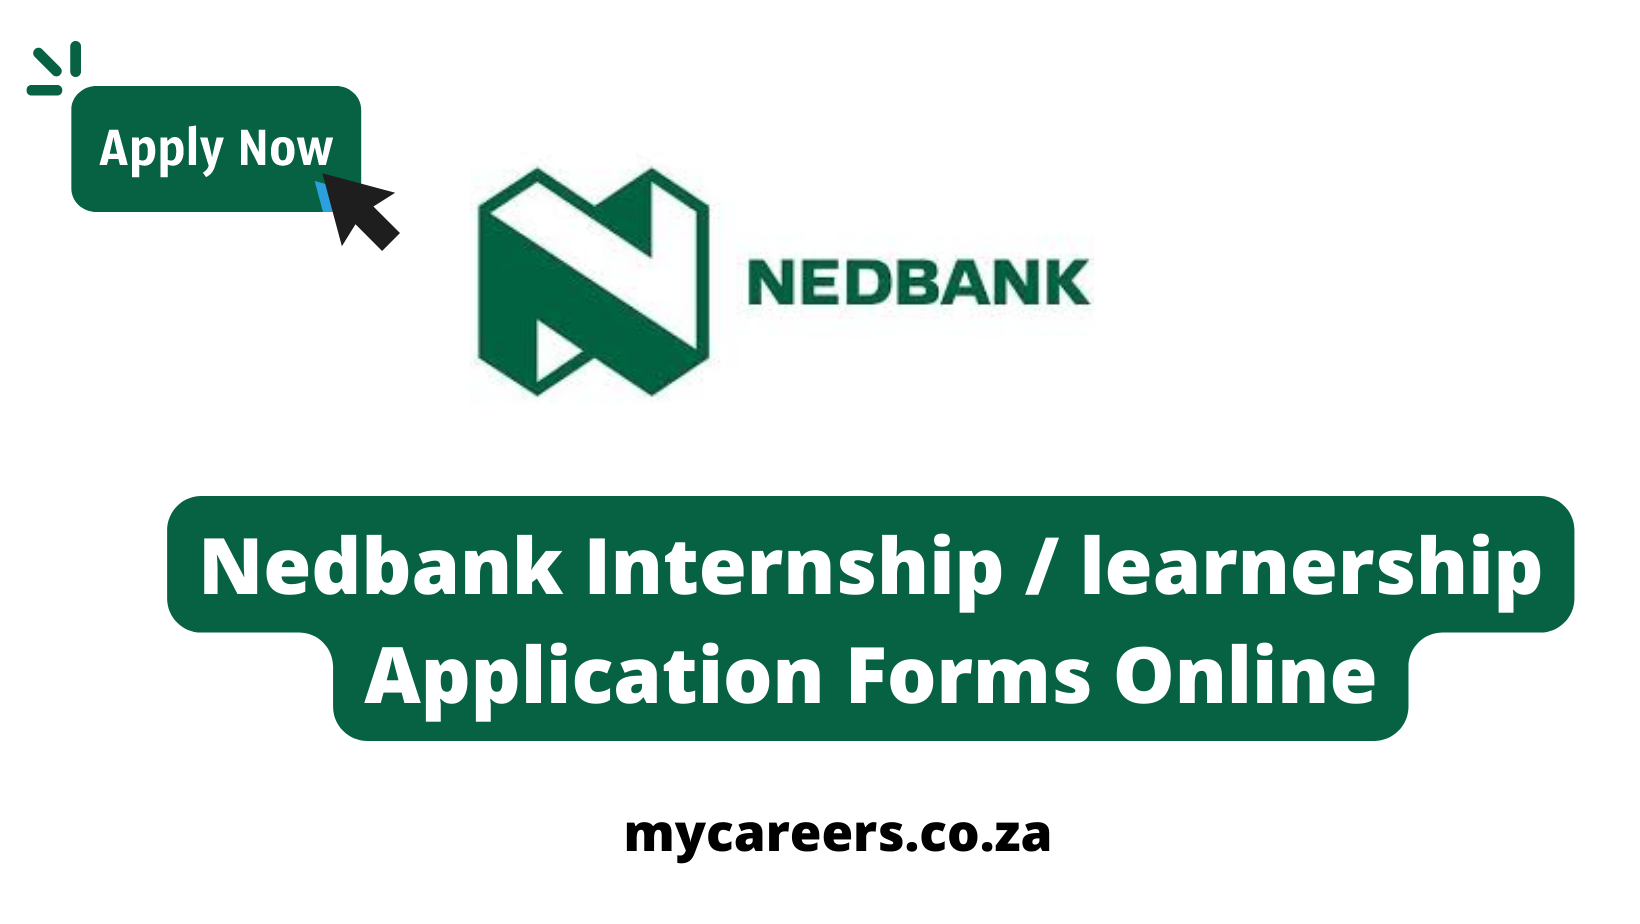 Nedbank Internship / learnership Application Forms Online